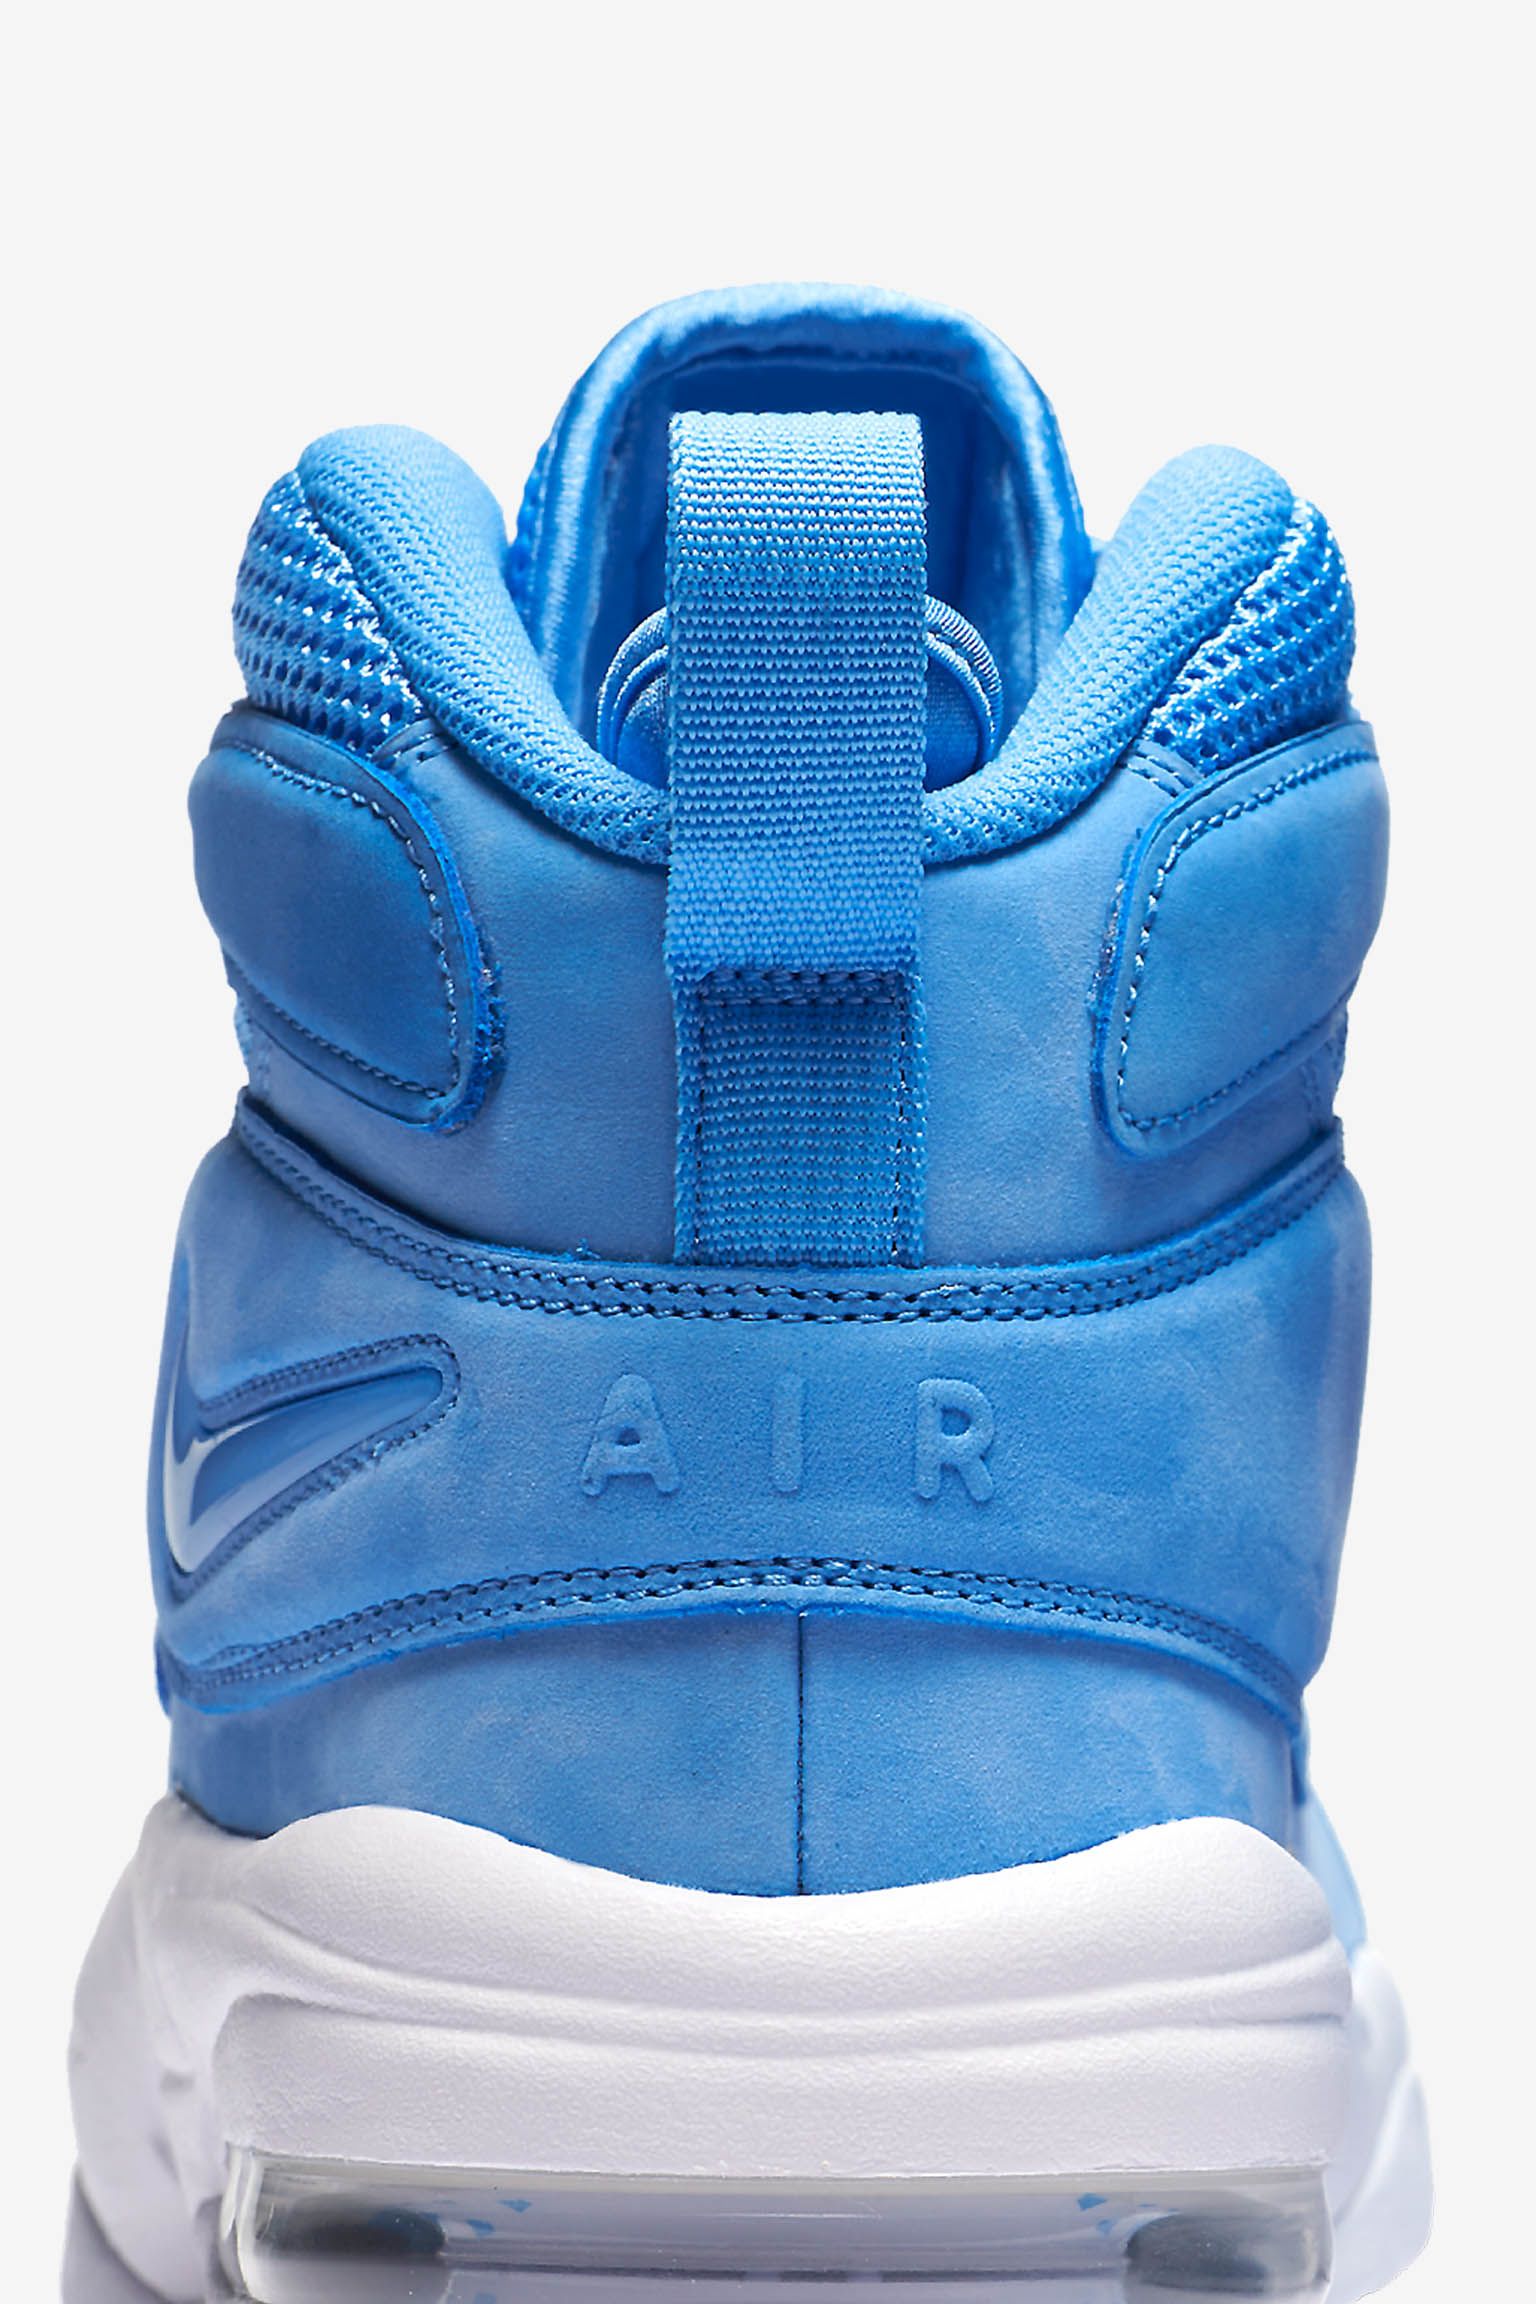 Nike Air Max2 Uptempo 94 "University Blue". Nike ES